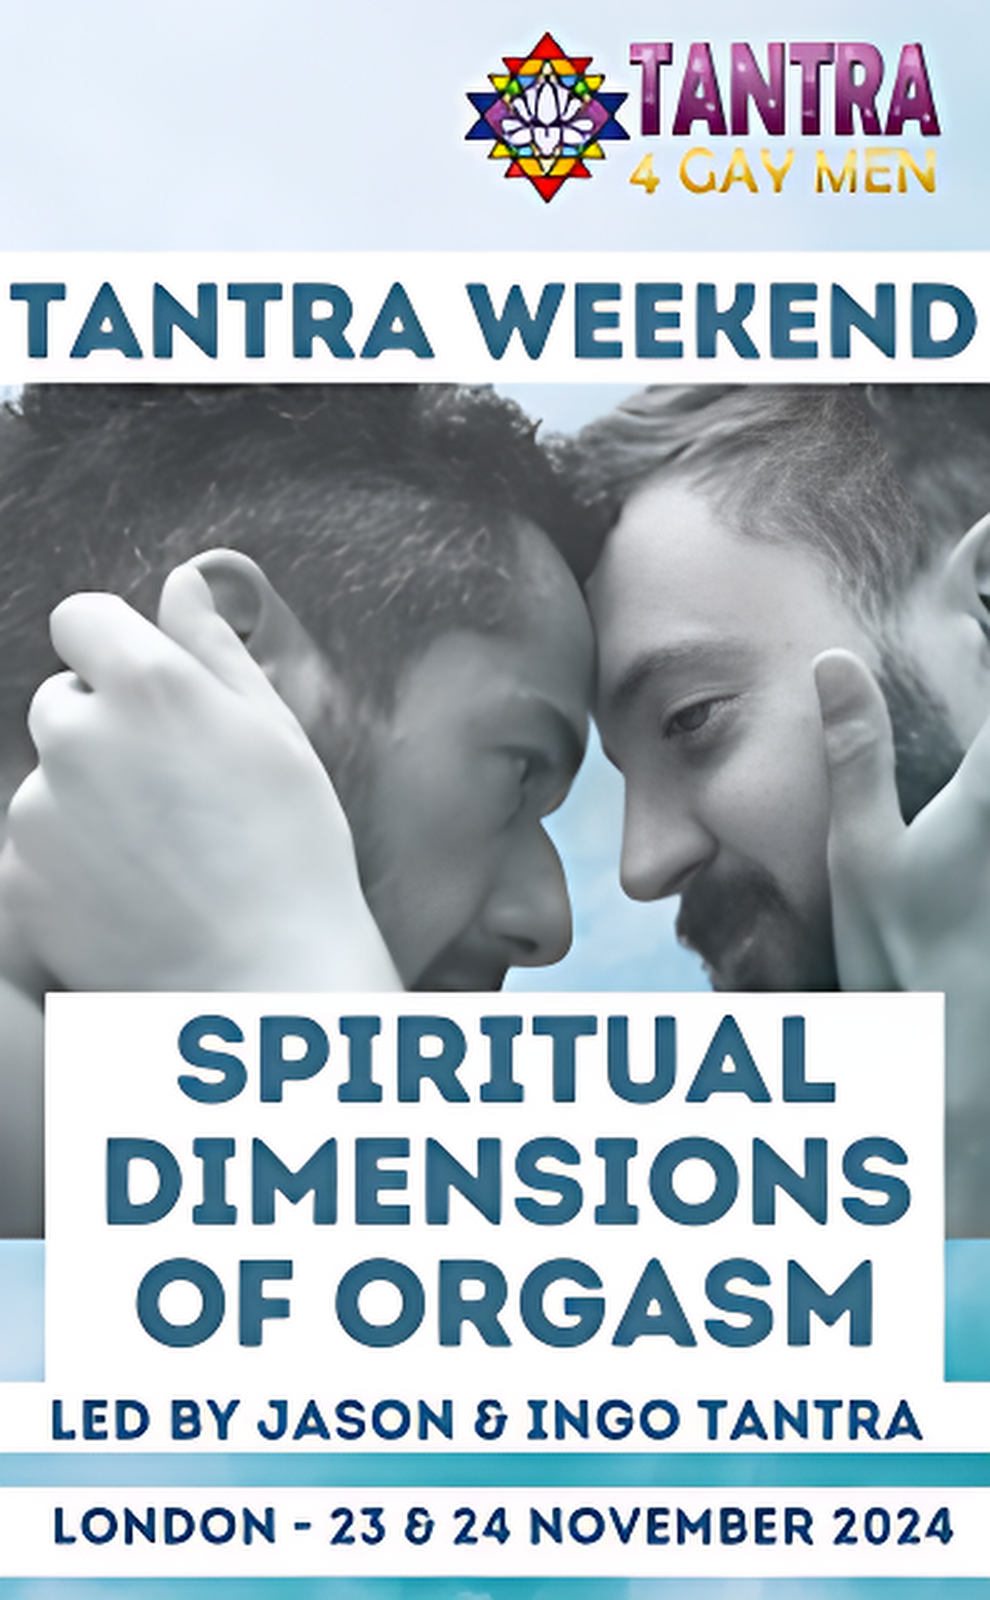 Tantra Weekend: Spiritual Dimensions of Orgasm